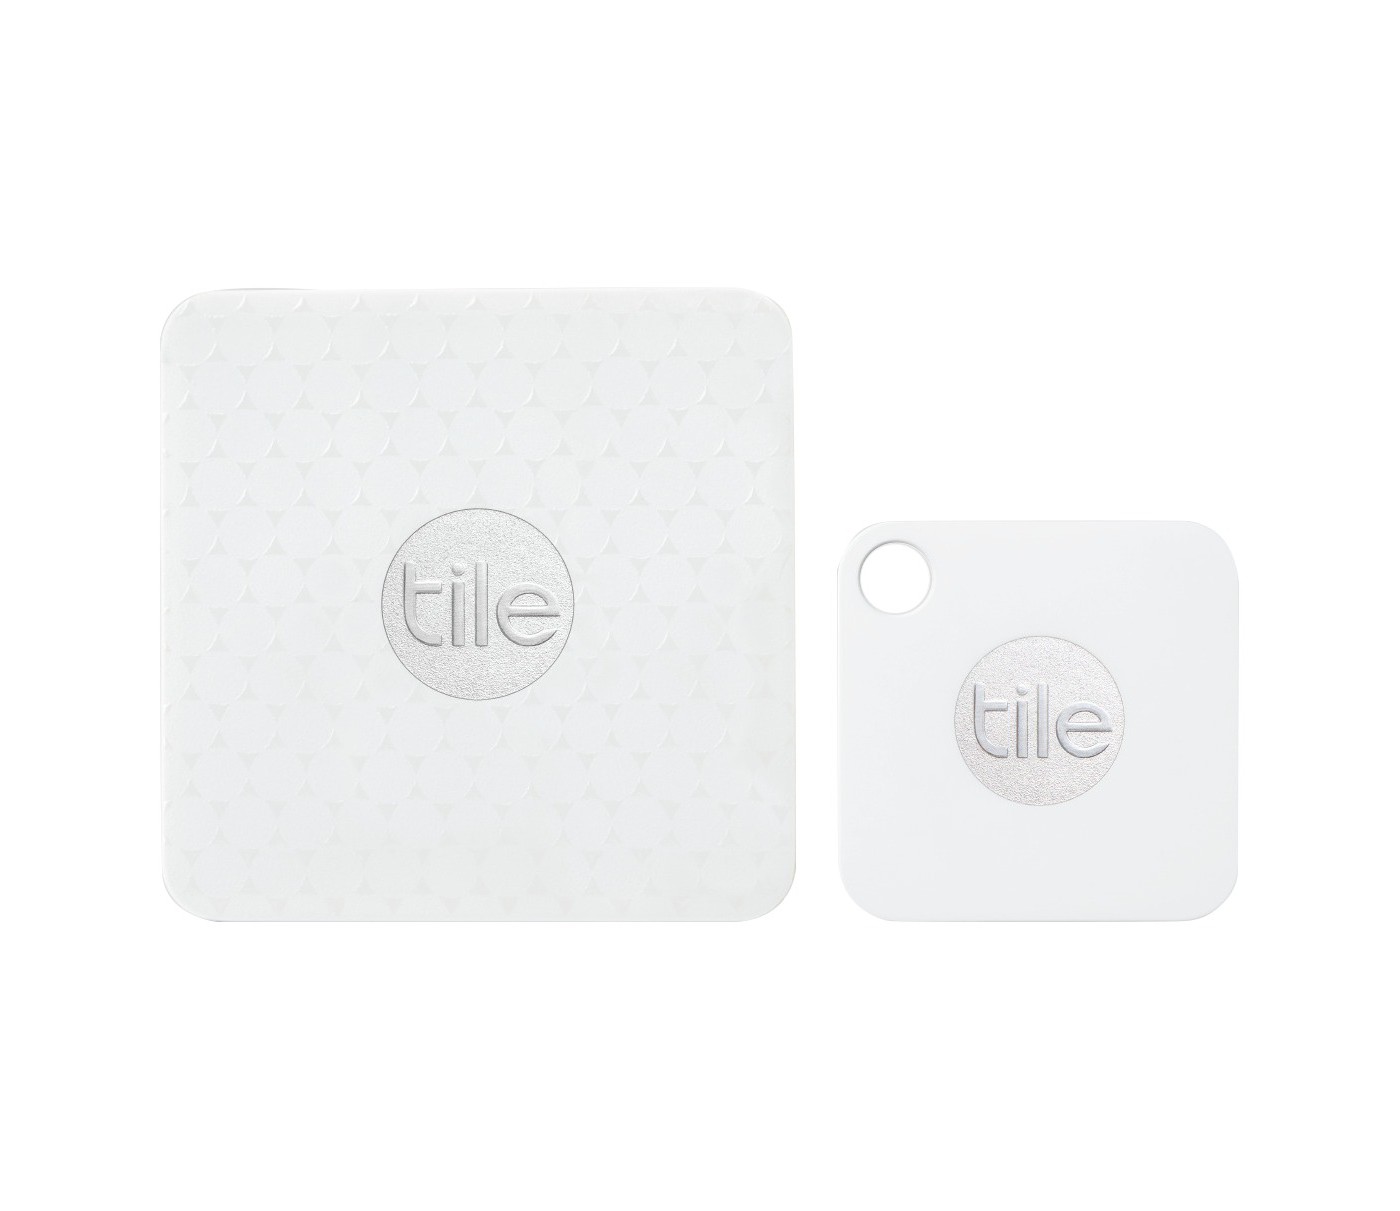 Tile Mate and Tile Slim Combo Pack 4pk - Black (RT-07004-NA) - image 1 of 6